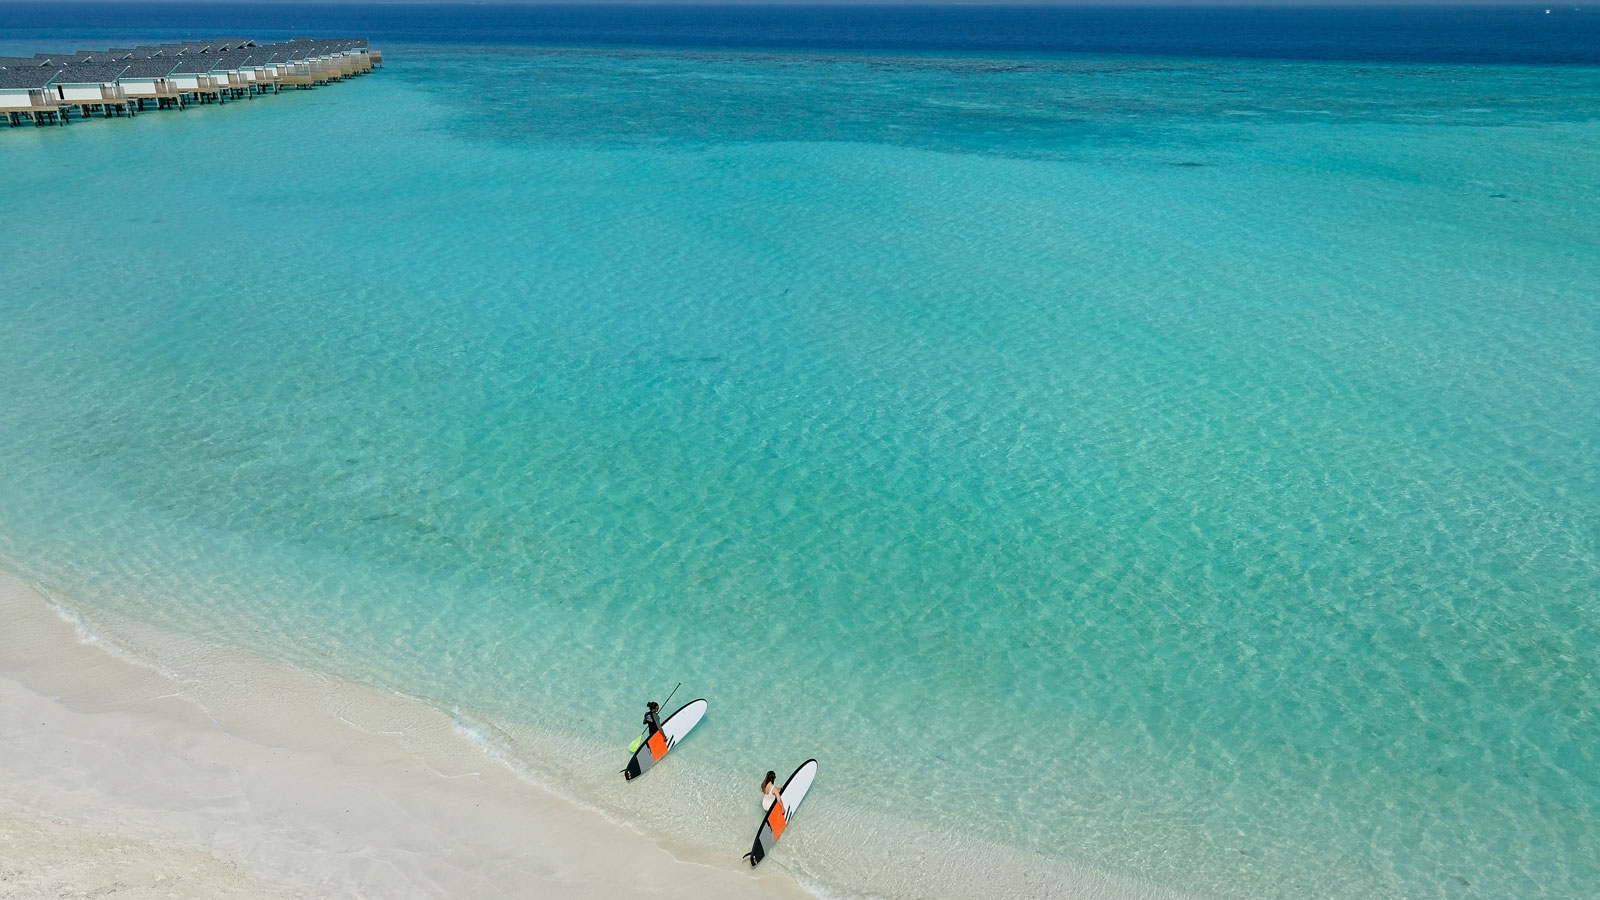 Stand-up paddle boarding (SUP) - Amari Raaya Maldives